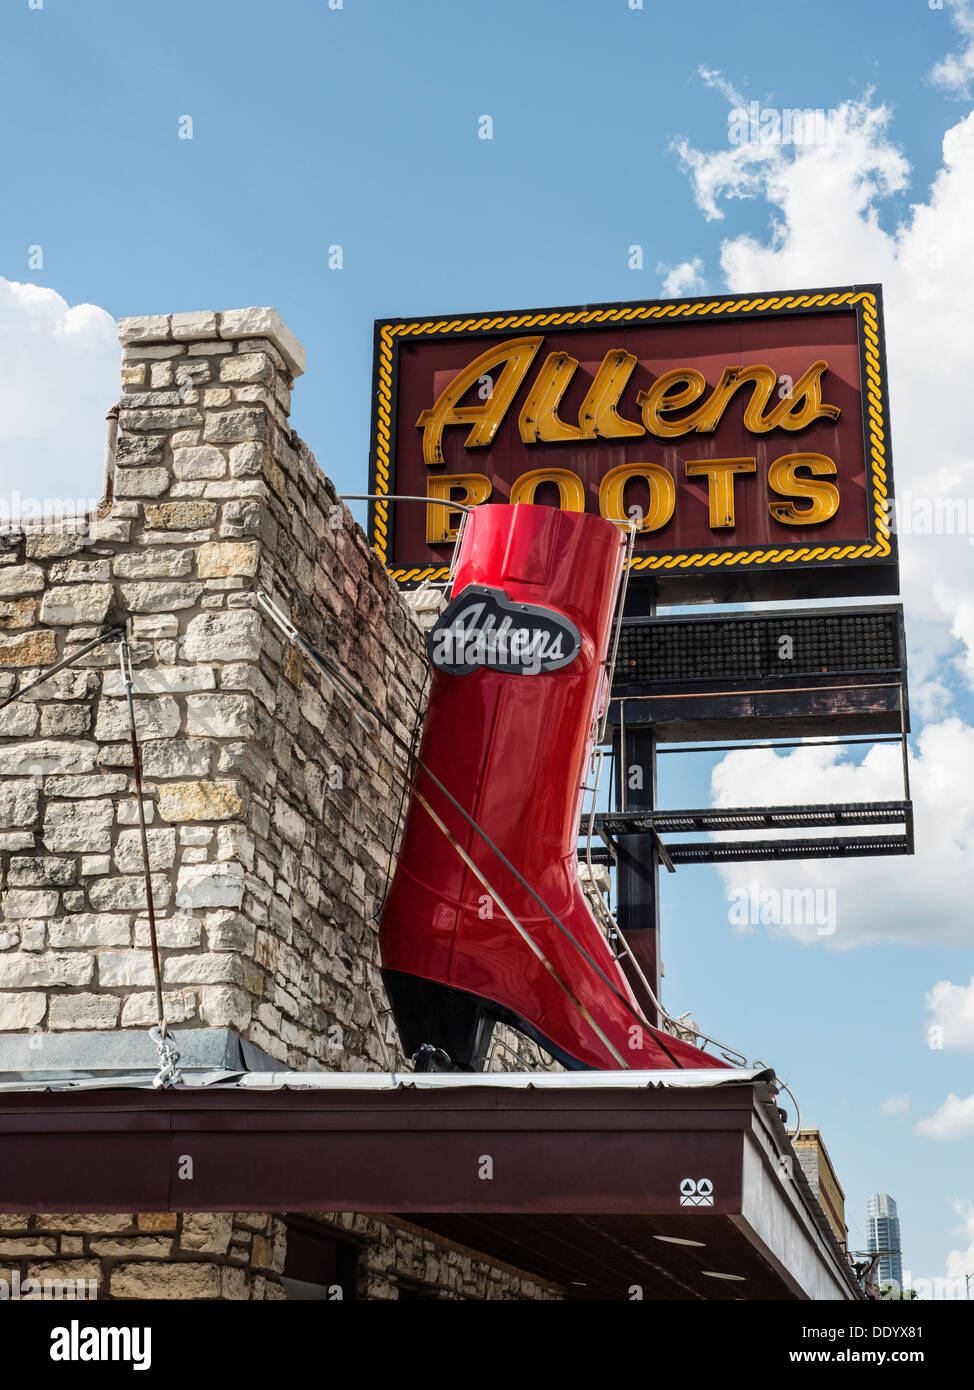 Allen boots Store auf der South Congress Avenue Shopping District in Austin, Texas. Stockfoto